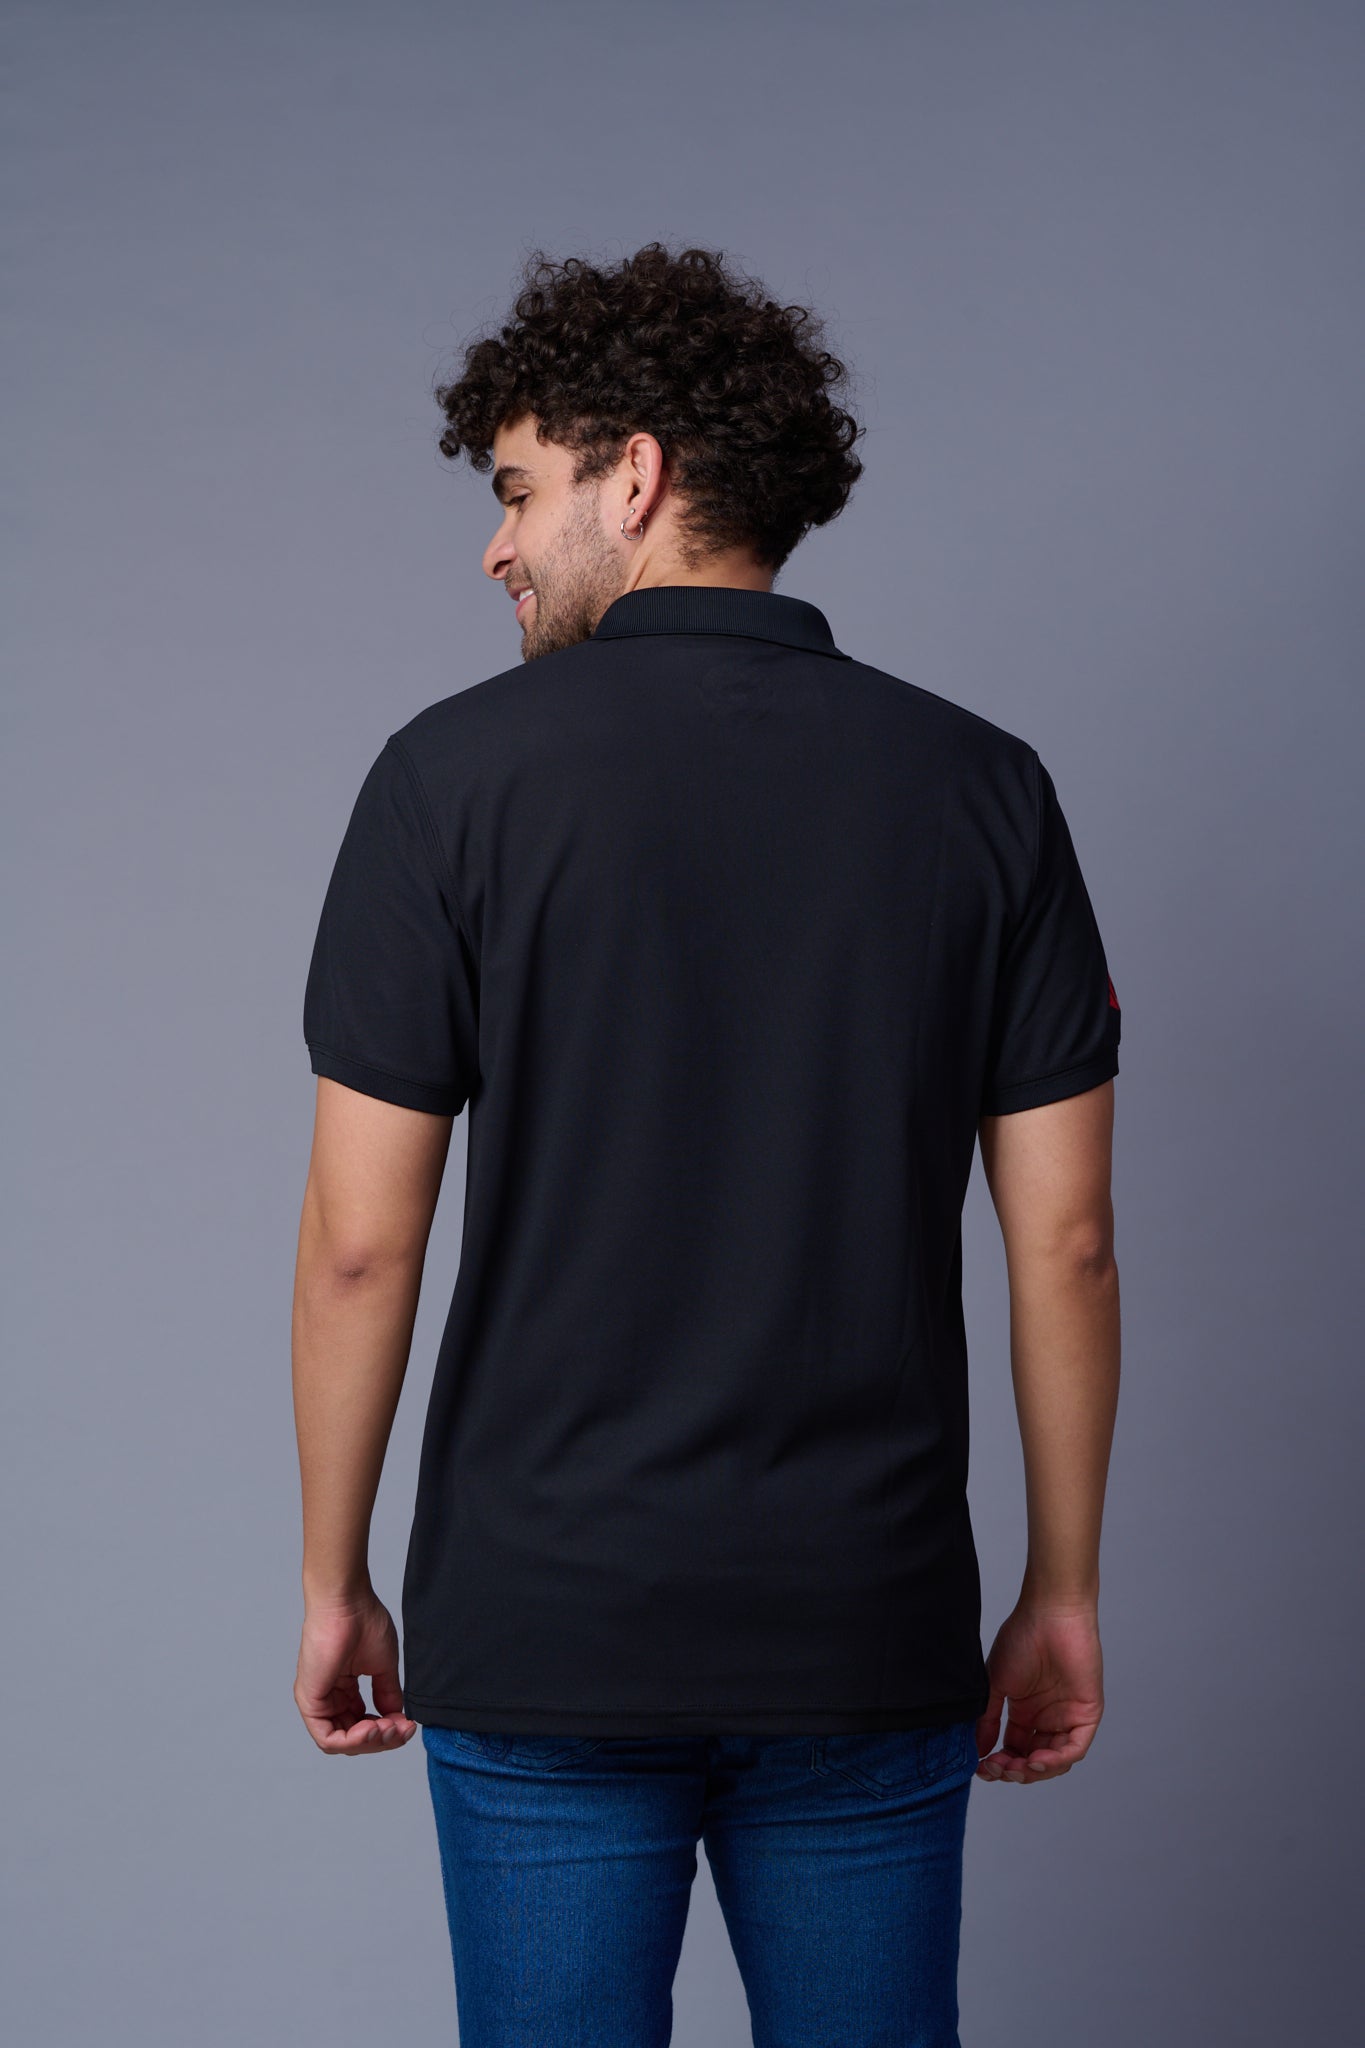 GD Logo Black Polo T-Shirt for Men